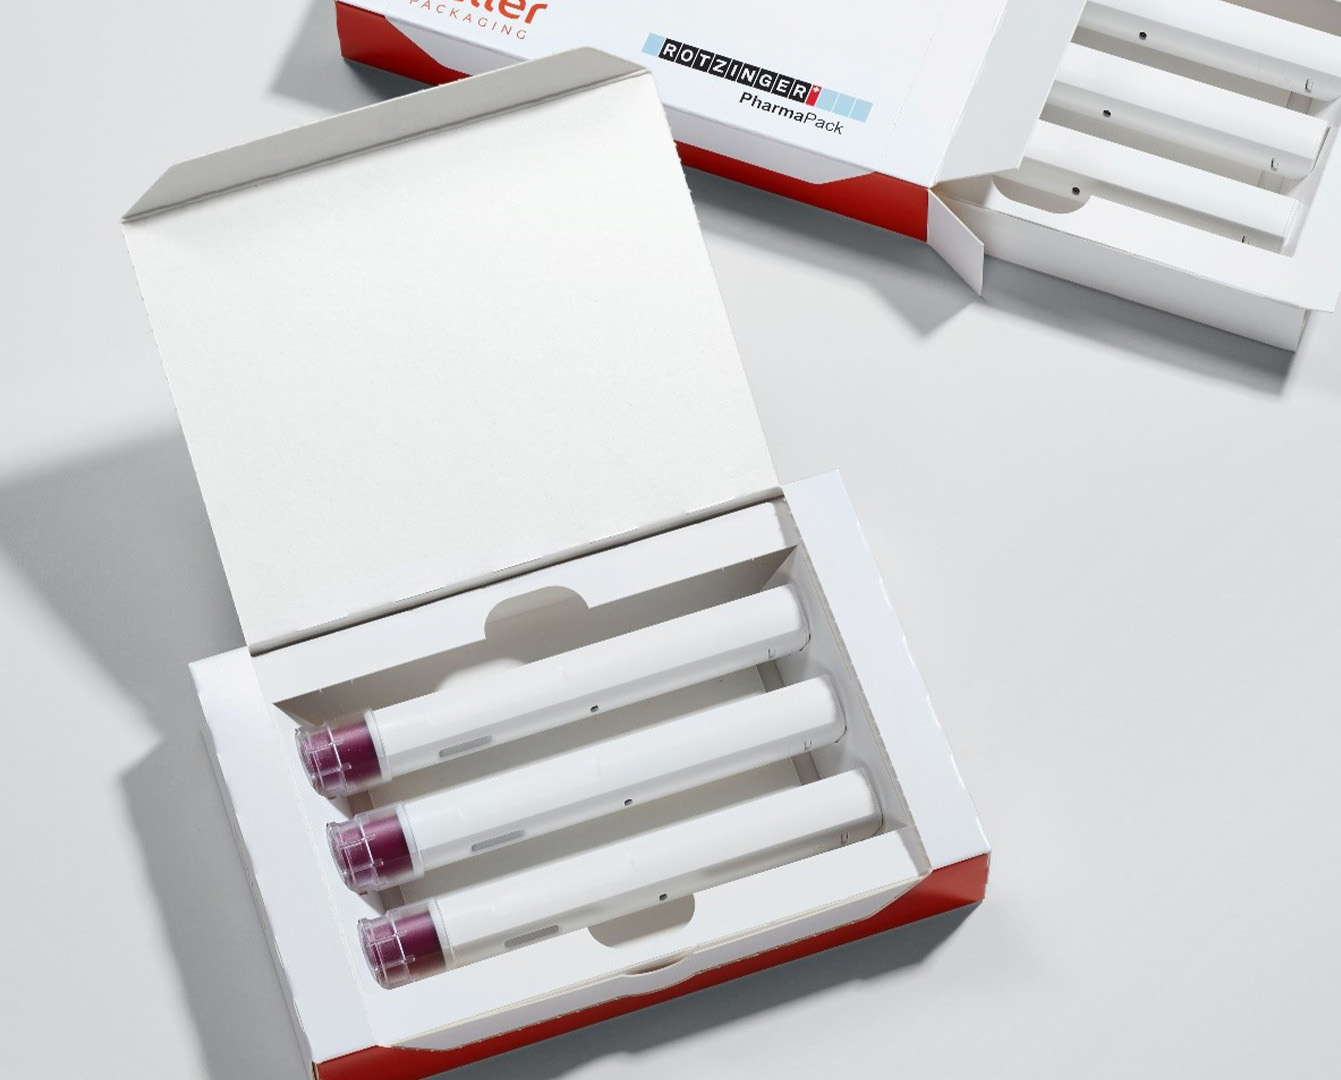 Set of Auto-injectors inside eco-save package Rotzinger PharmaPack